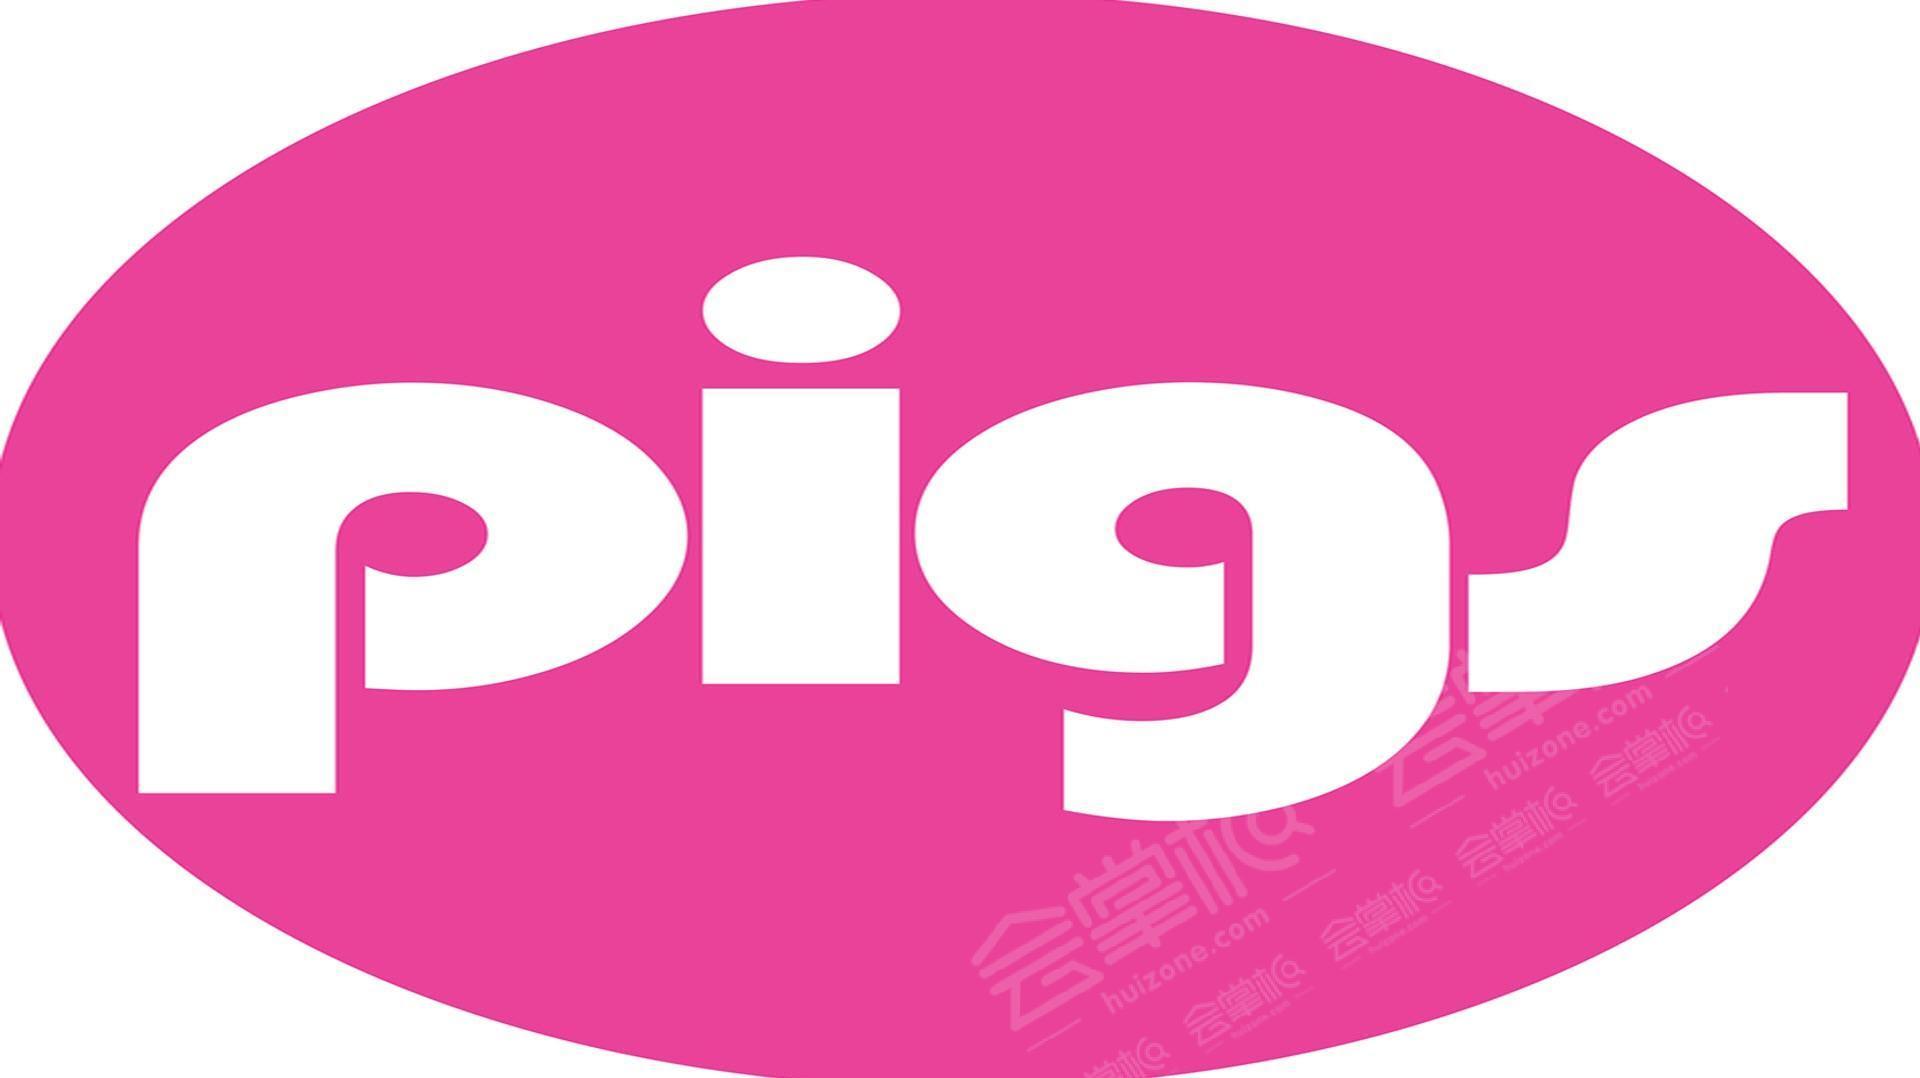 PIGS (Premier Incoming Group Services) DMC